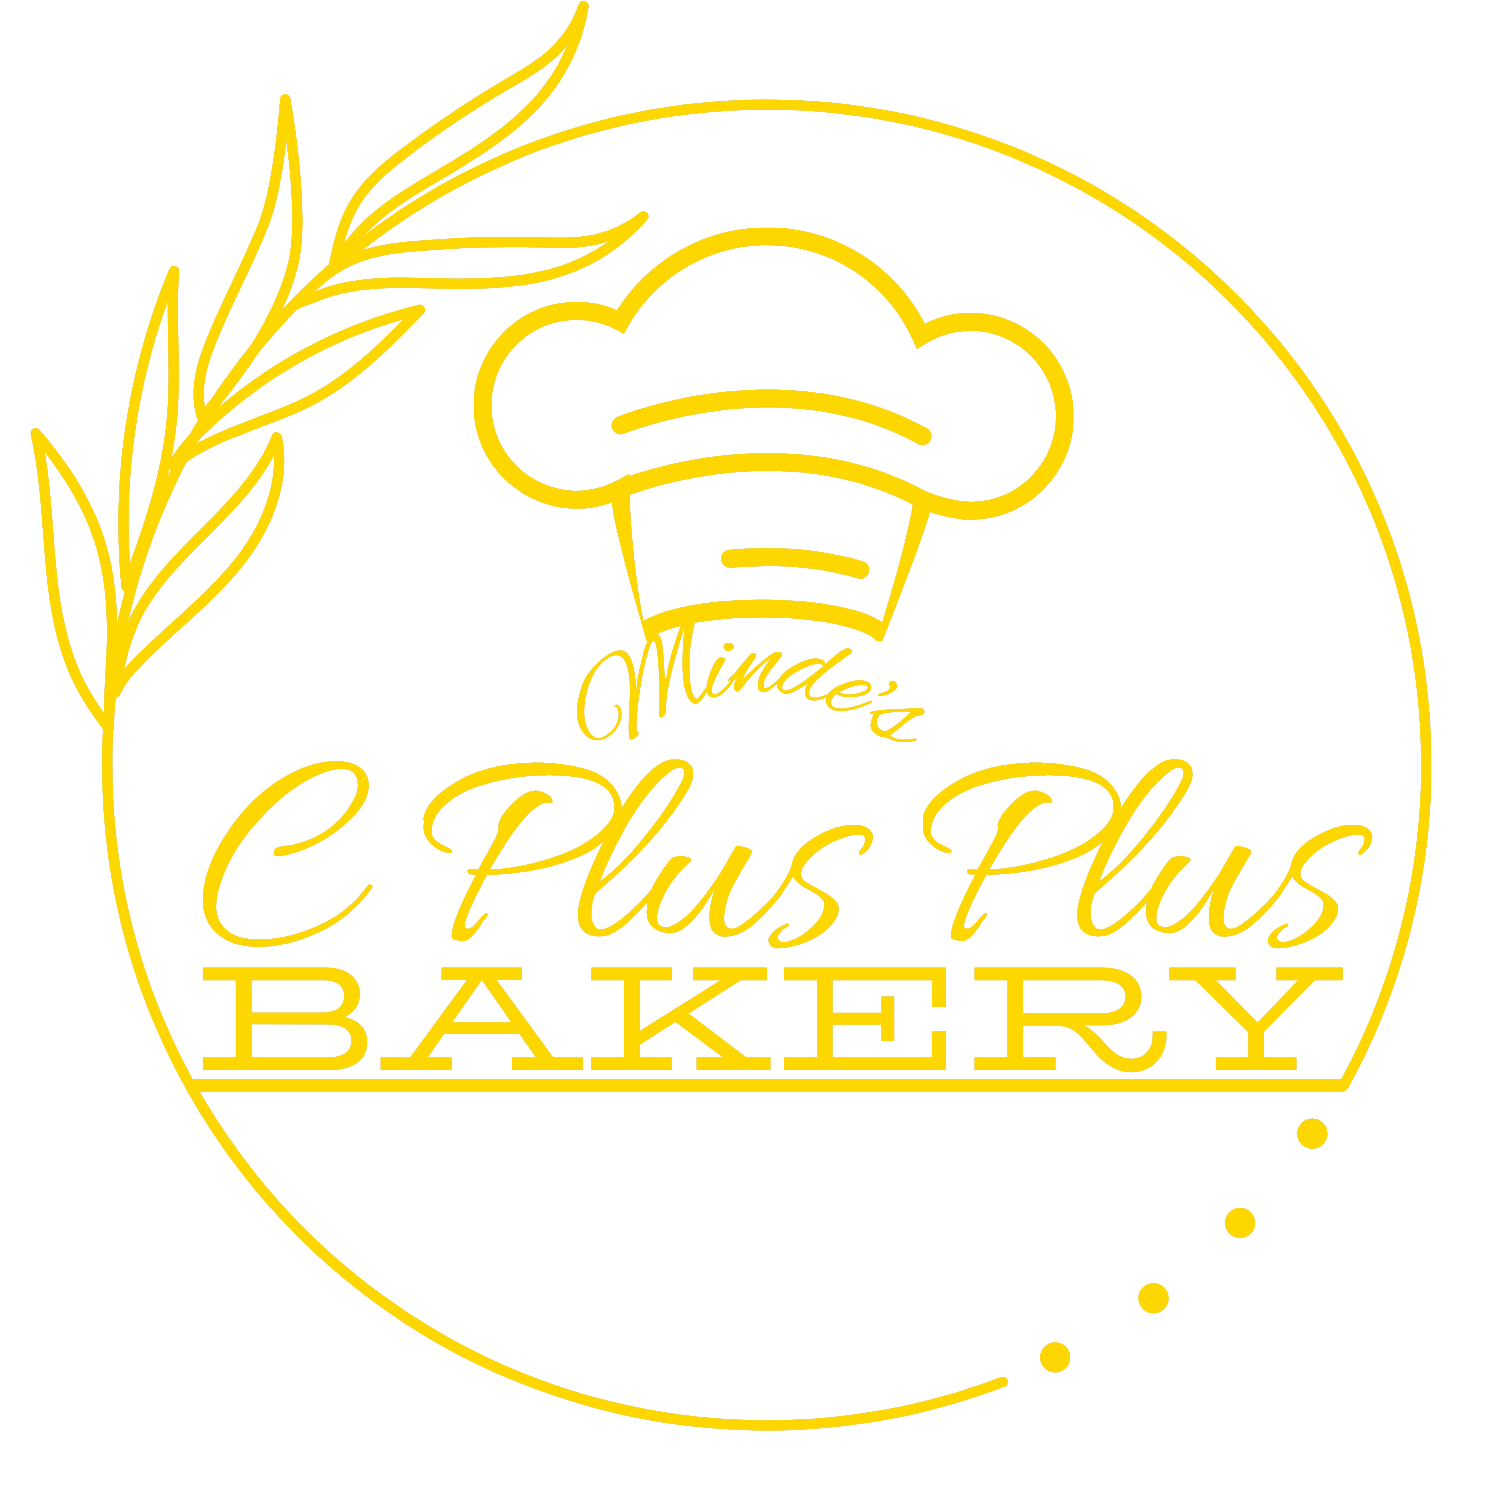 C Plus Plus Bakery Logo